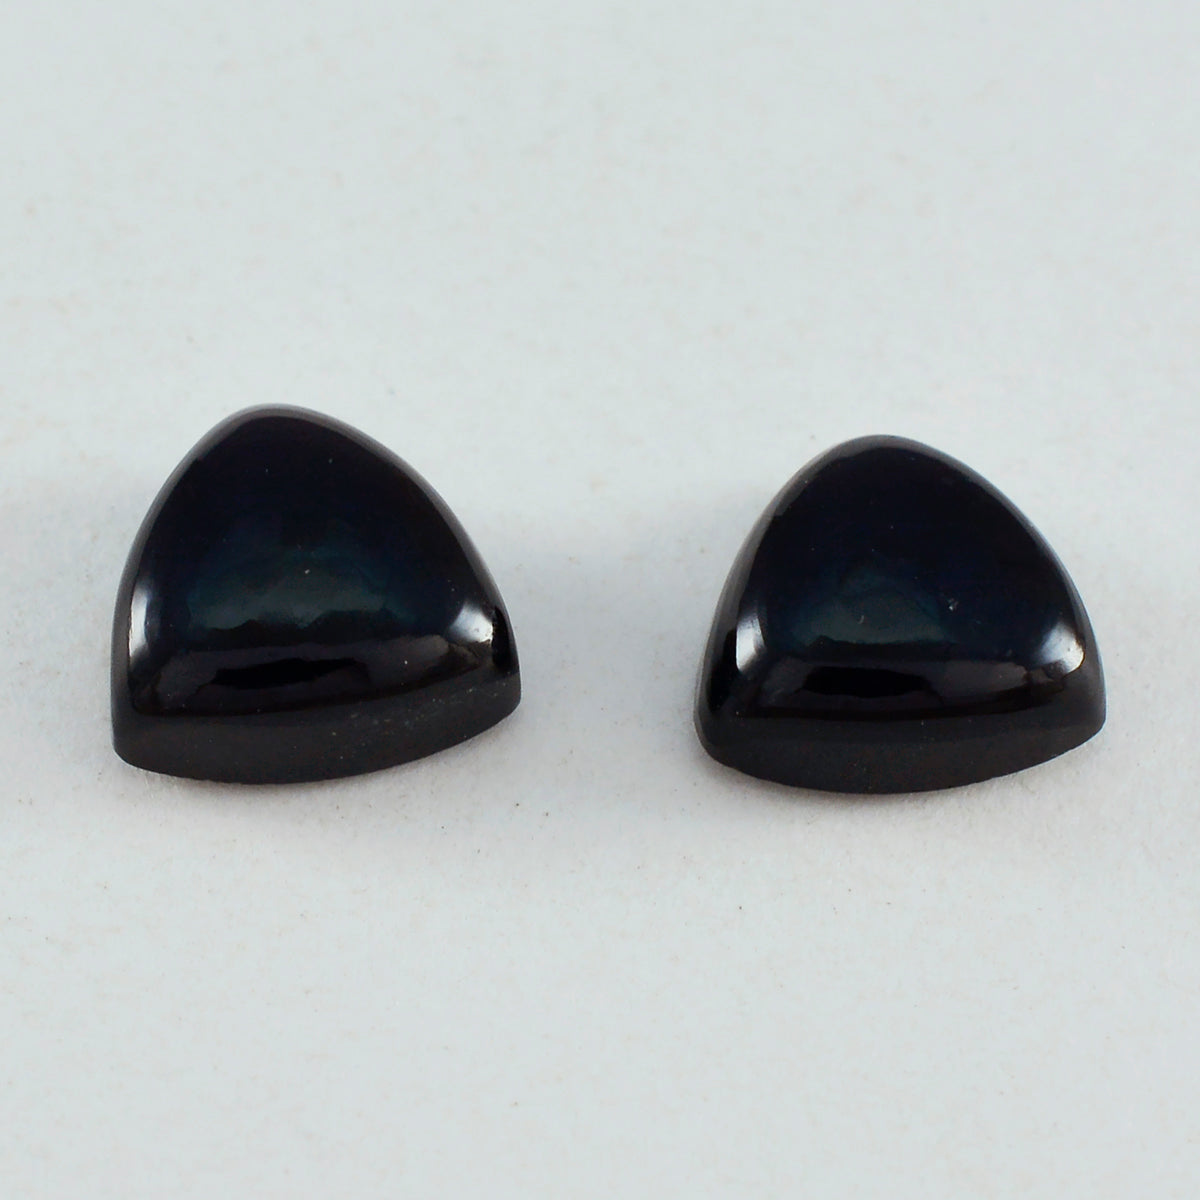 Riyogems 1PC Black Onyx Cabochon 13x13 mm Trillion Shape Nice Quality Loose Stone